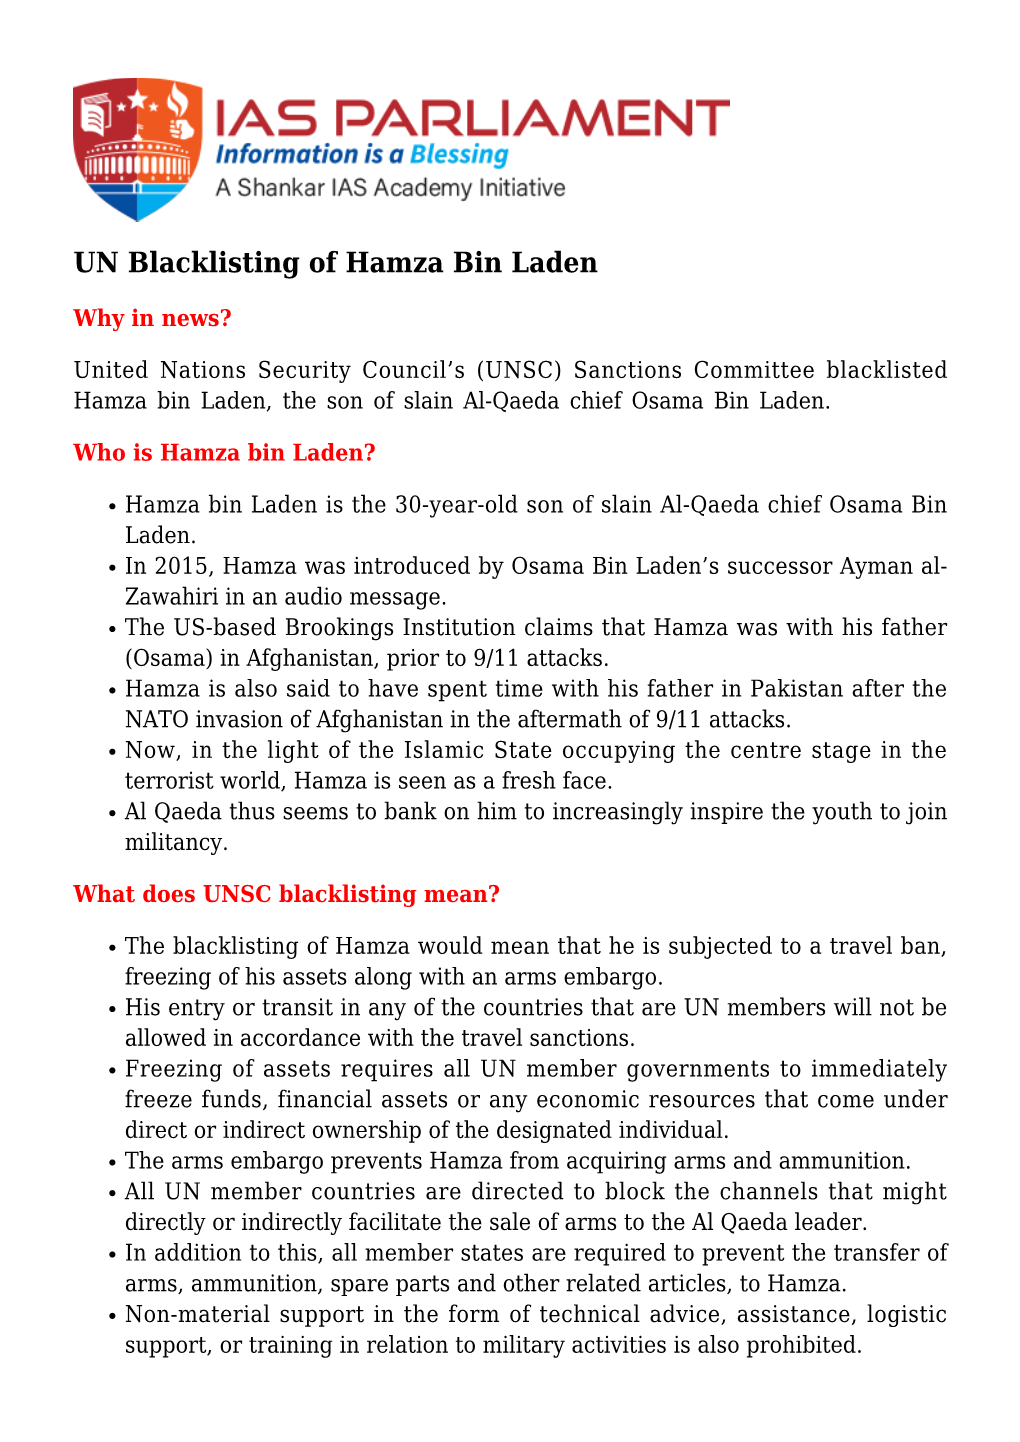 UN Blacklisting of Hamza Bin Laden